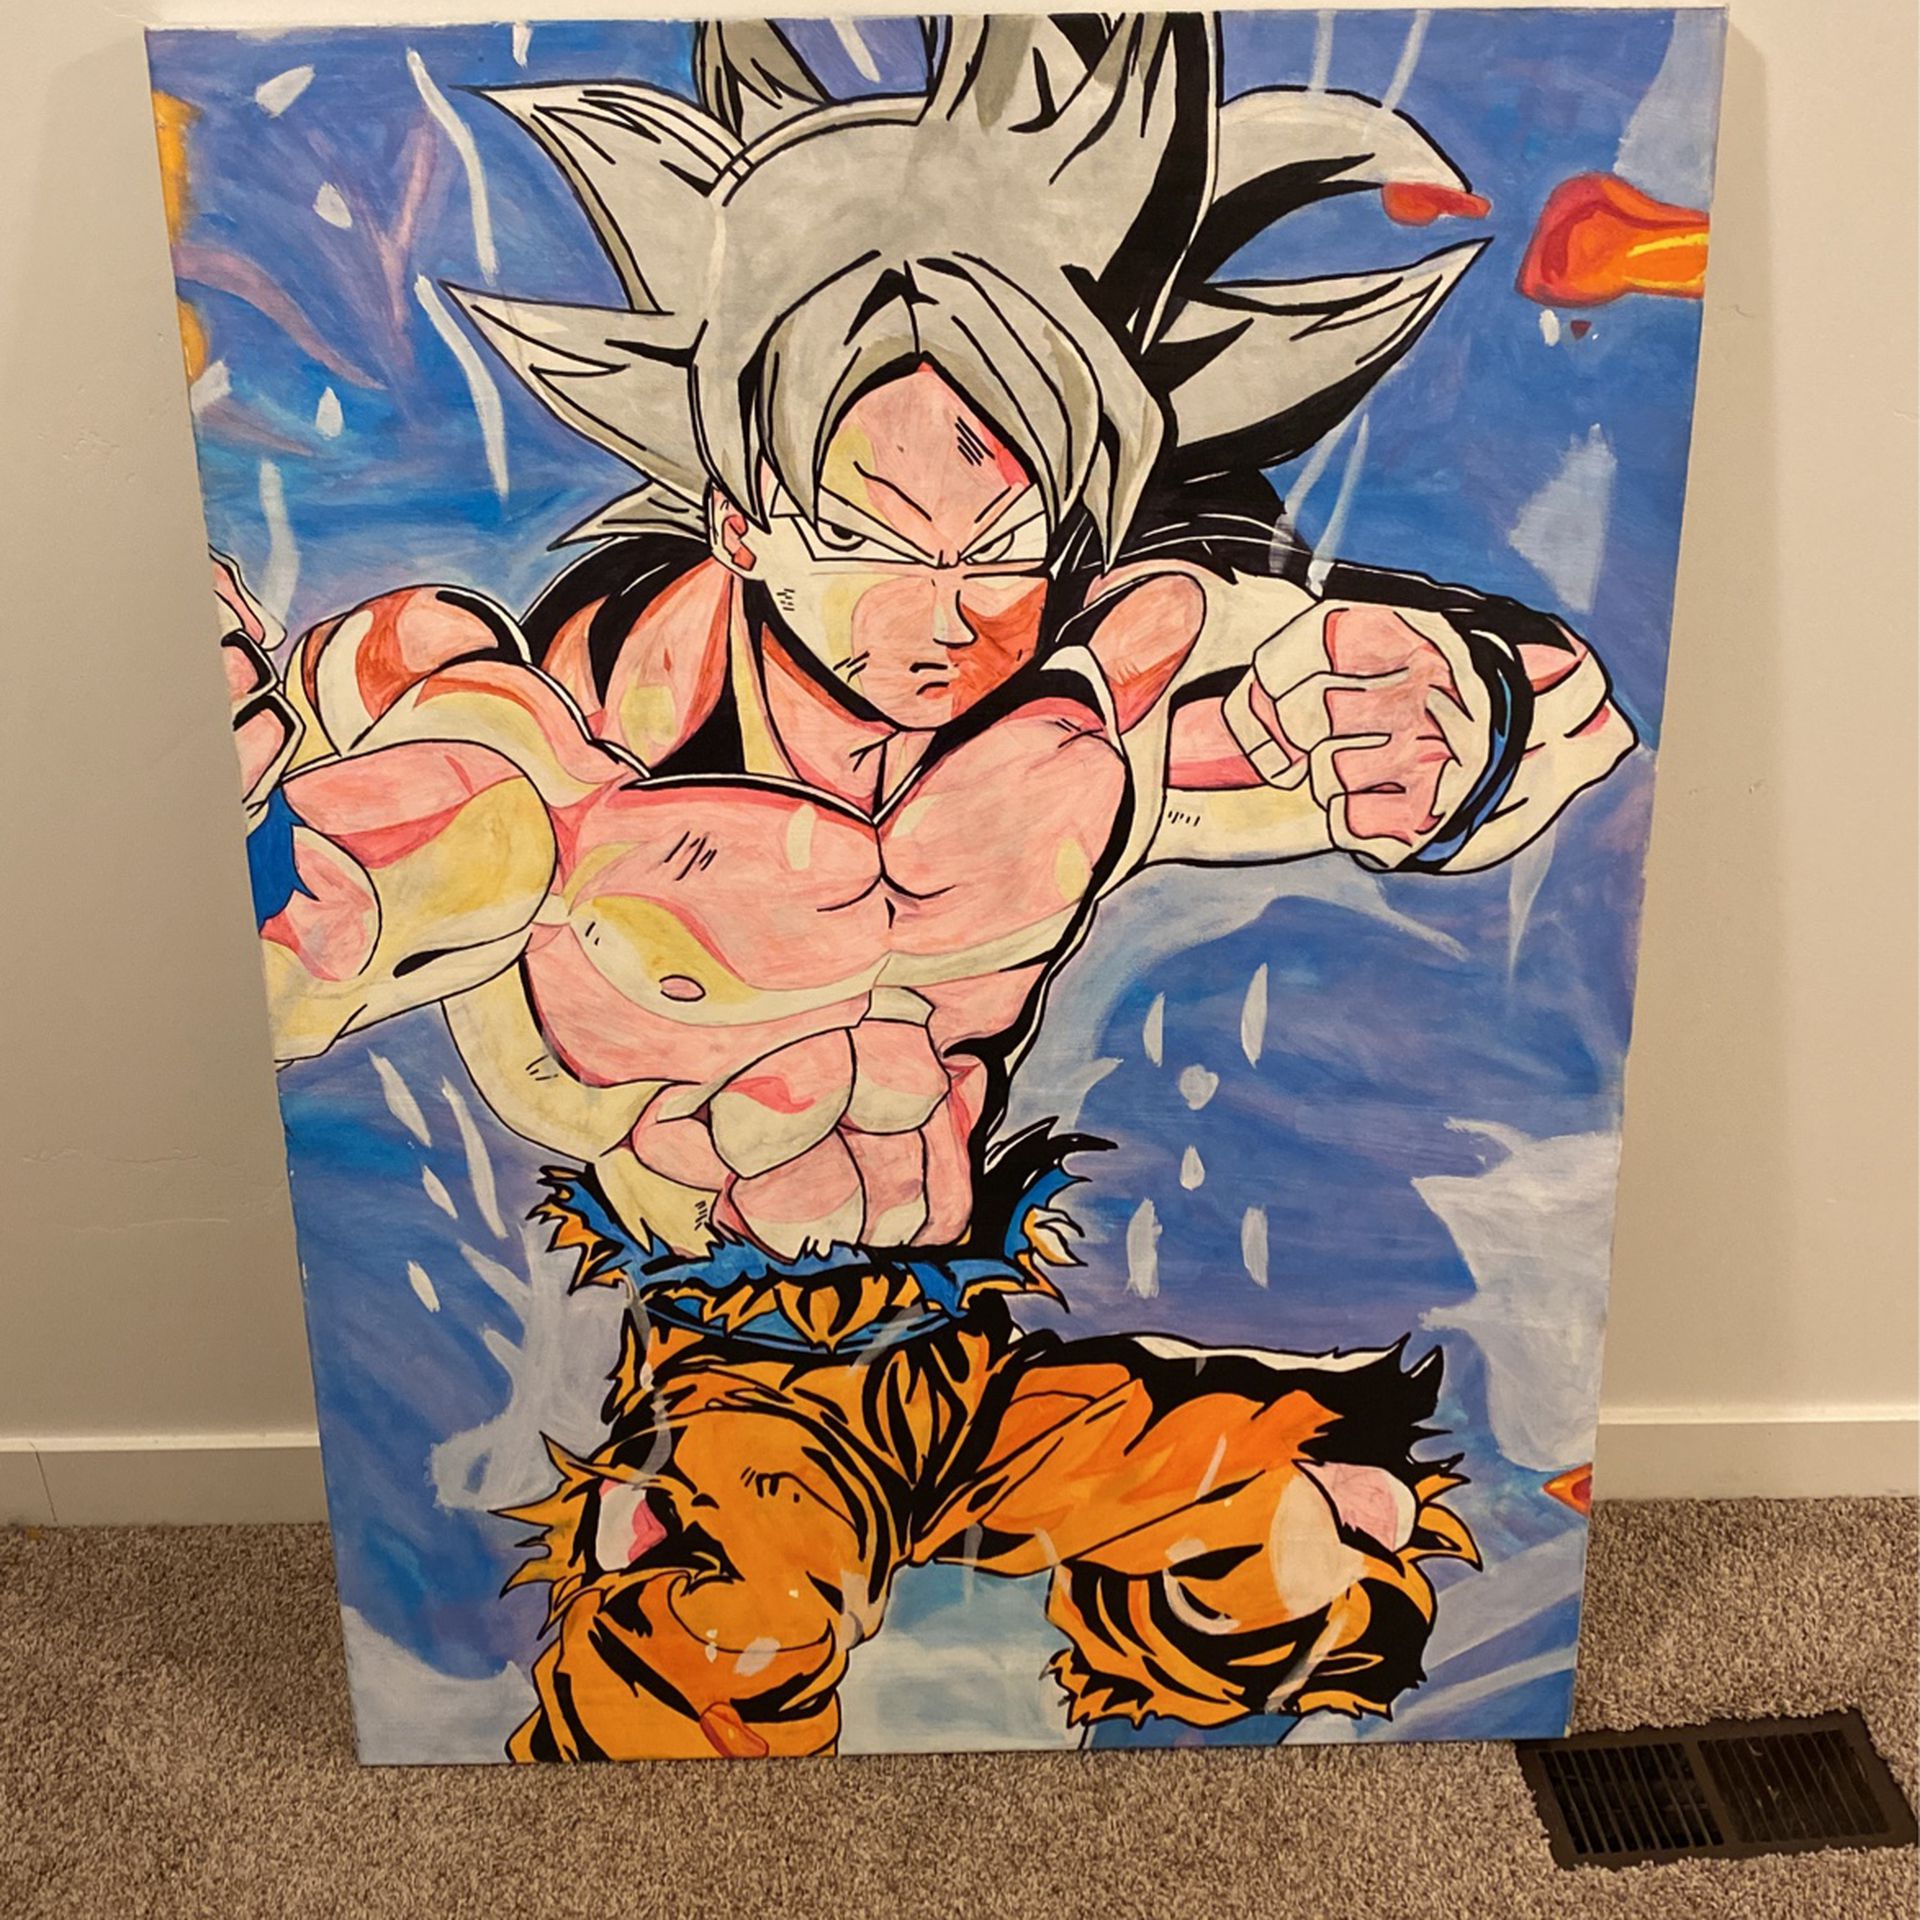 Mastered Ultra Instinct Goku Poster Painting 